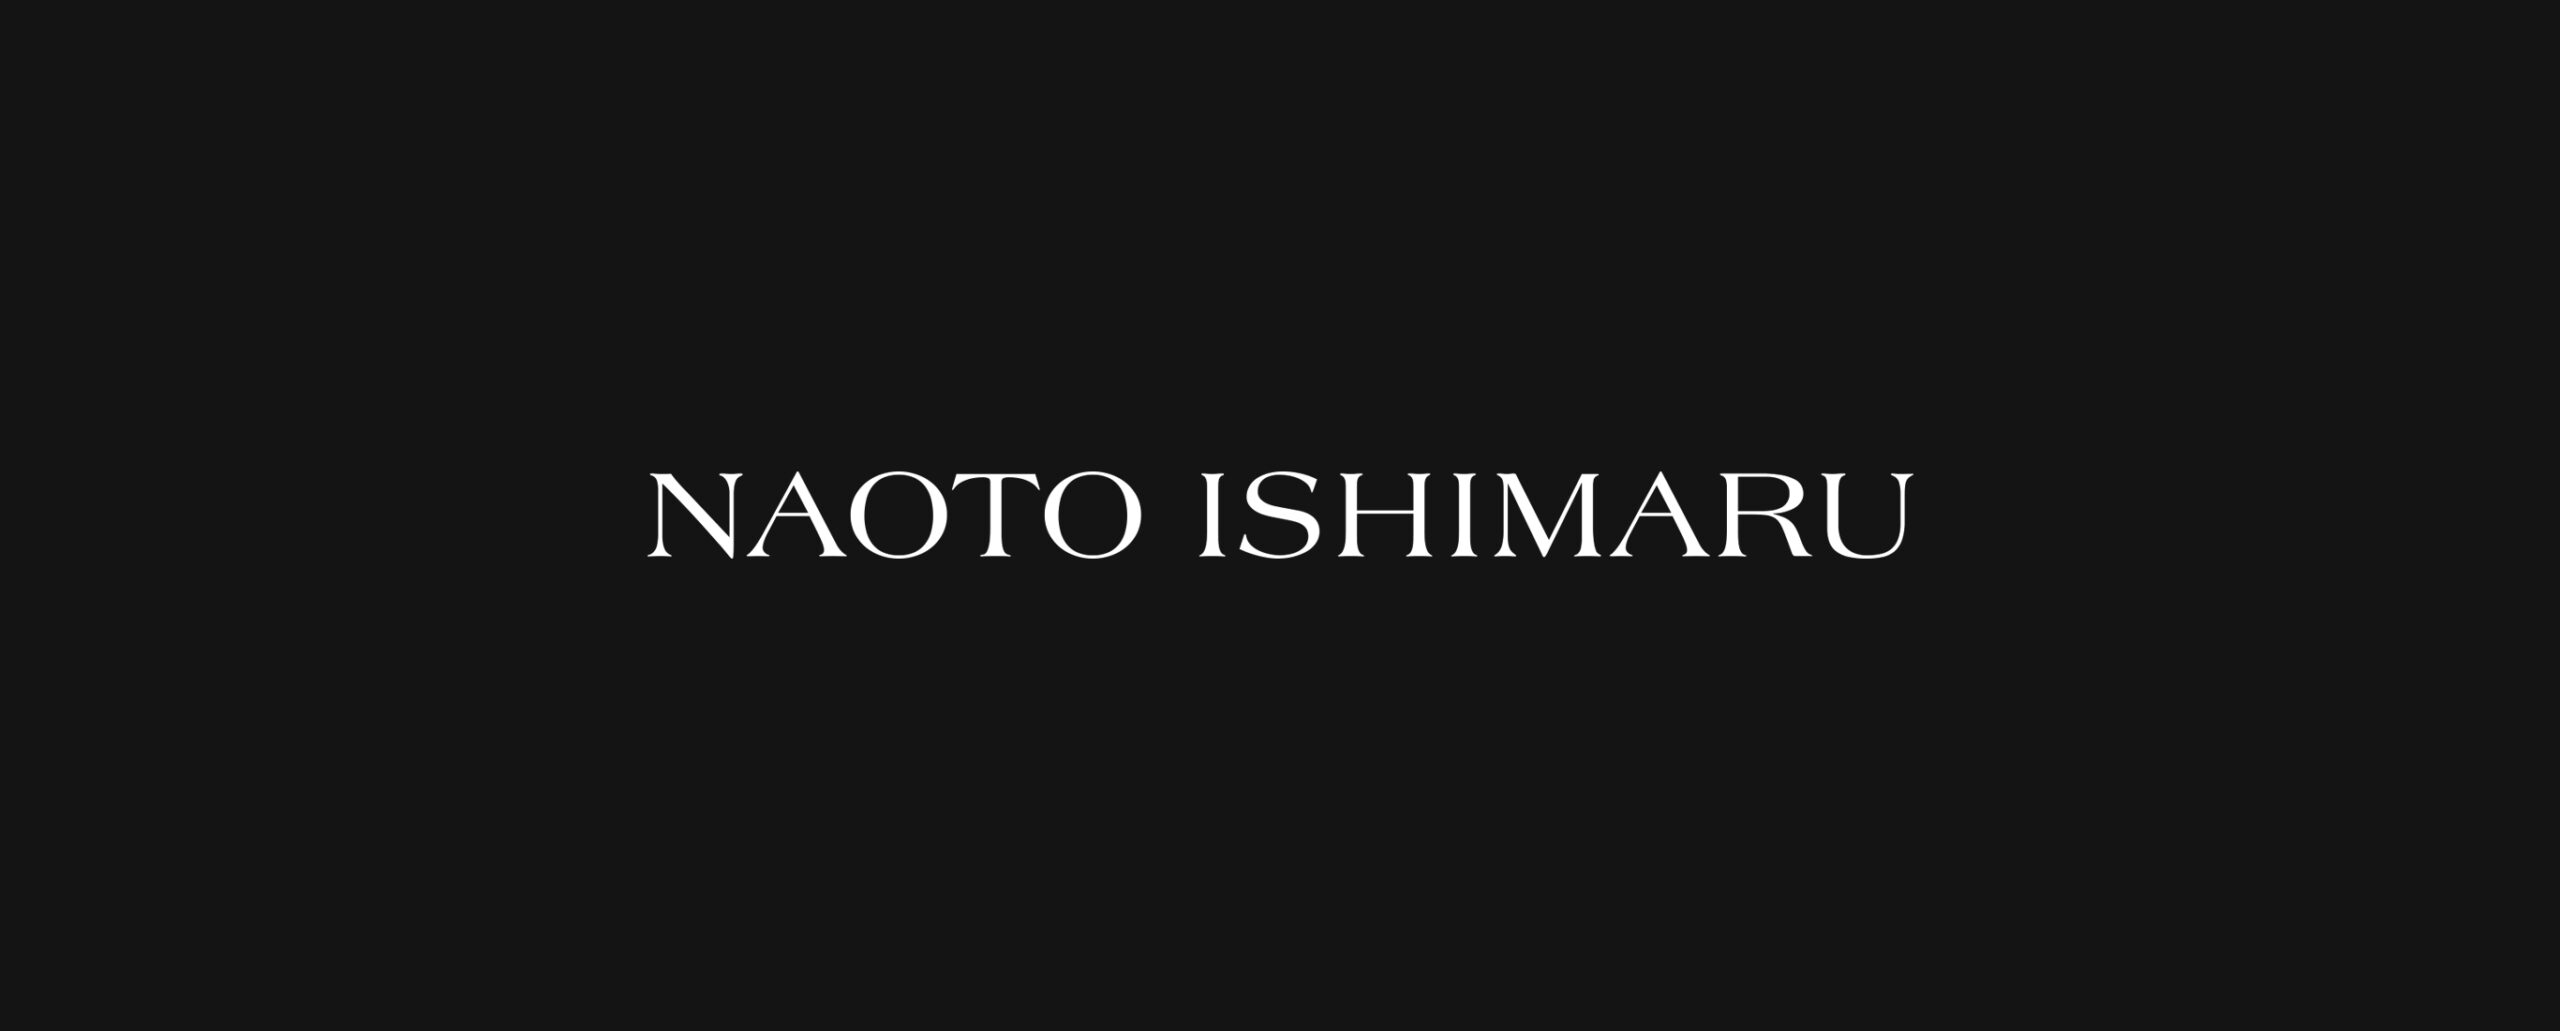 Naoto Ishimaru